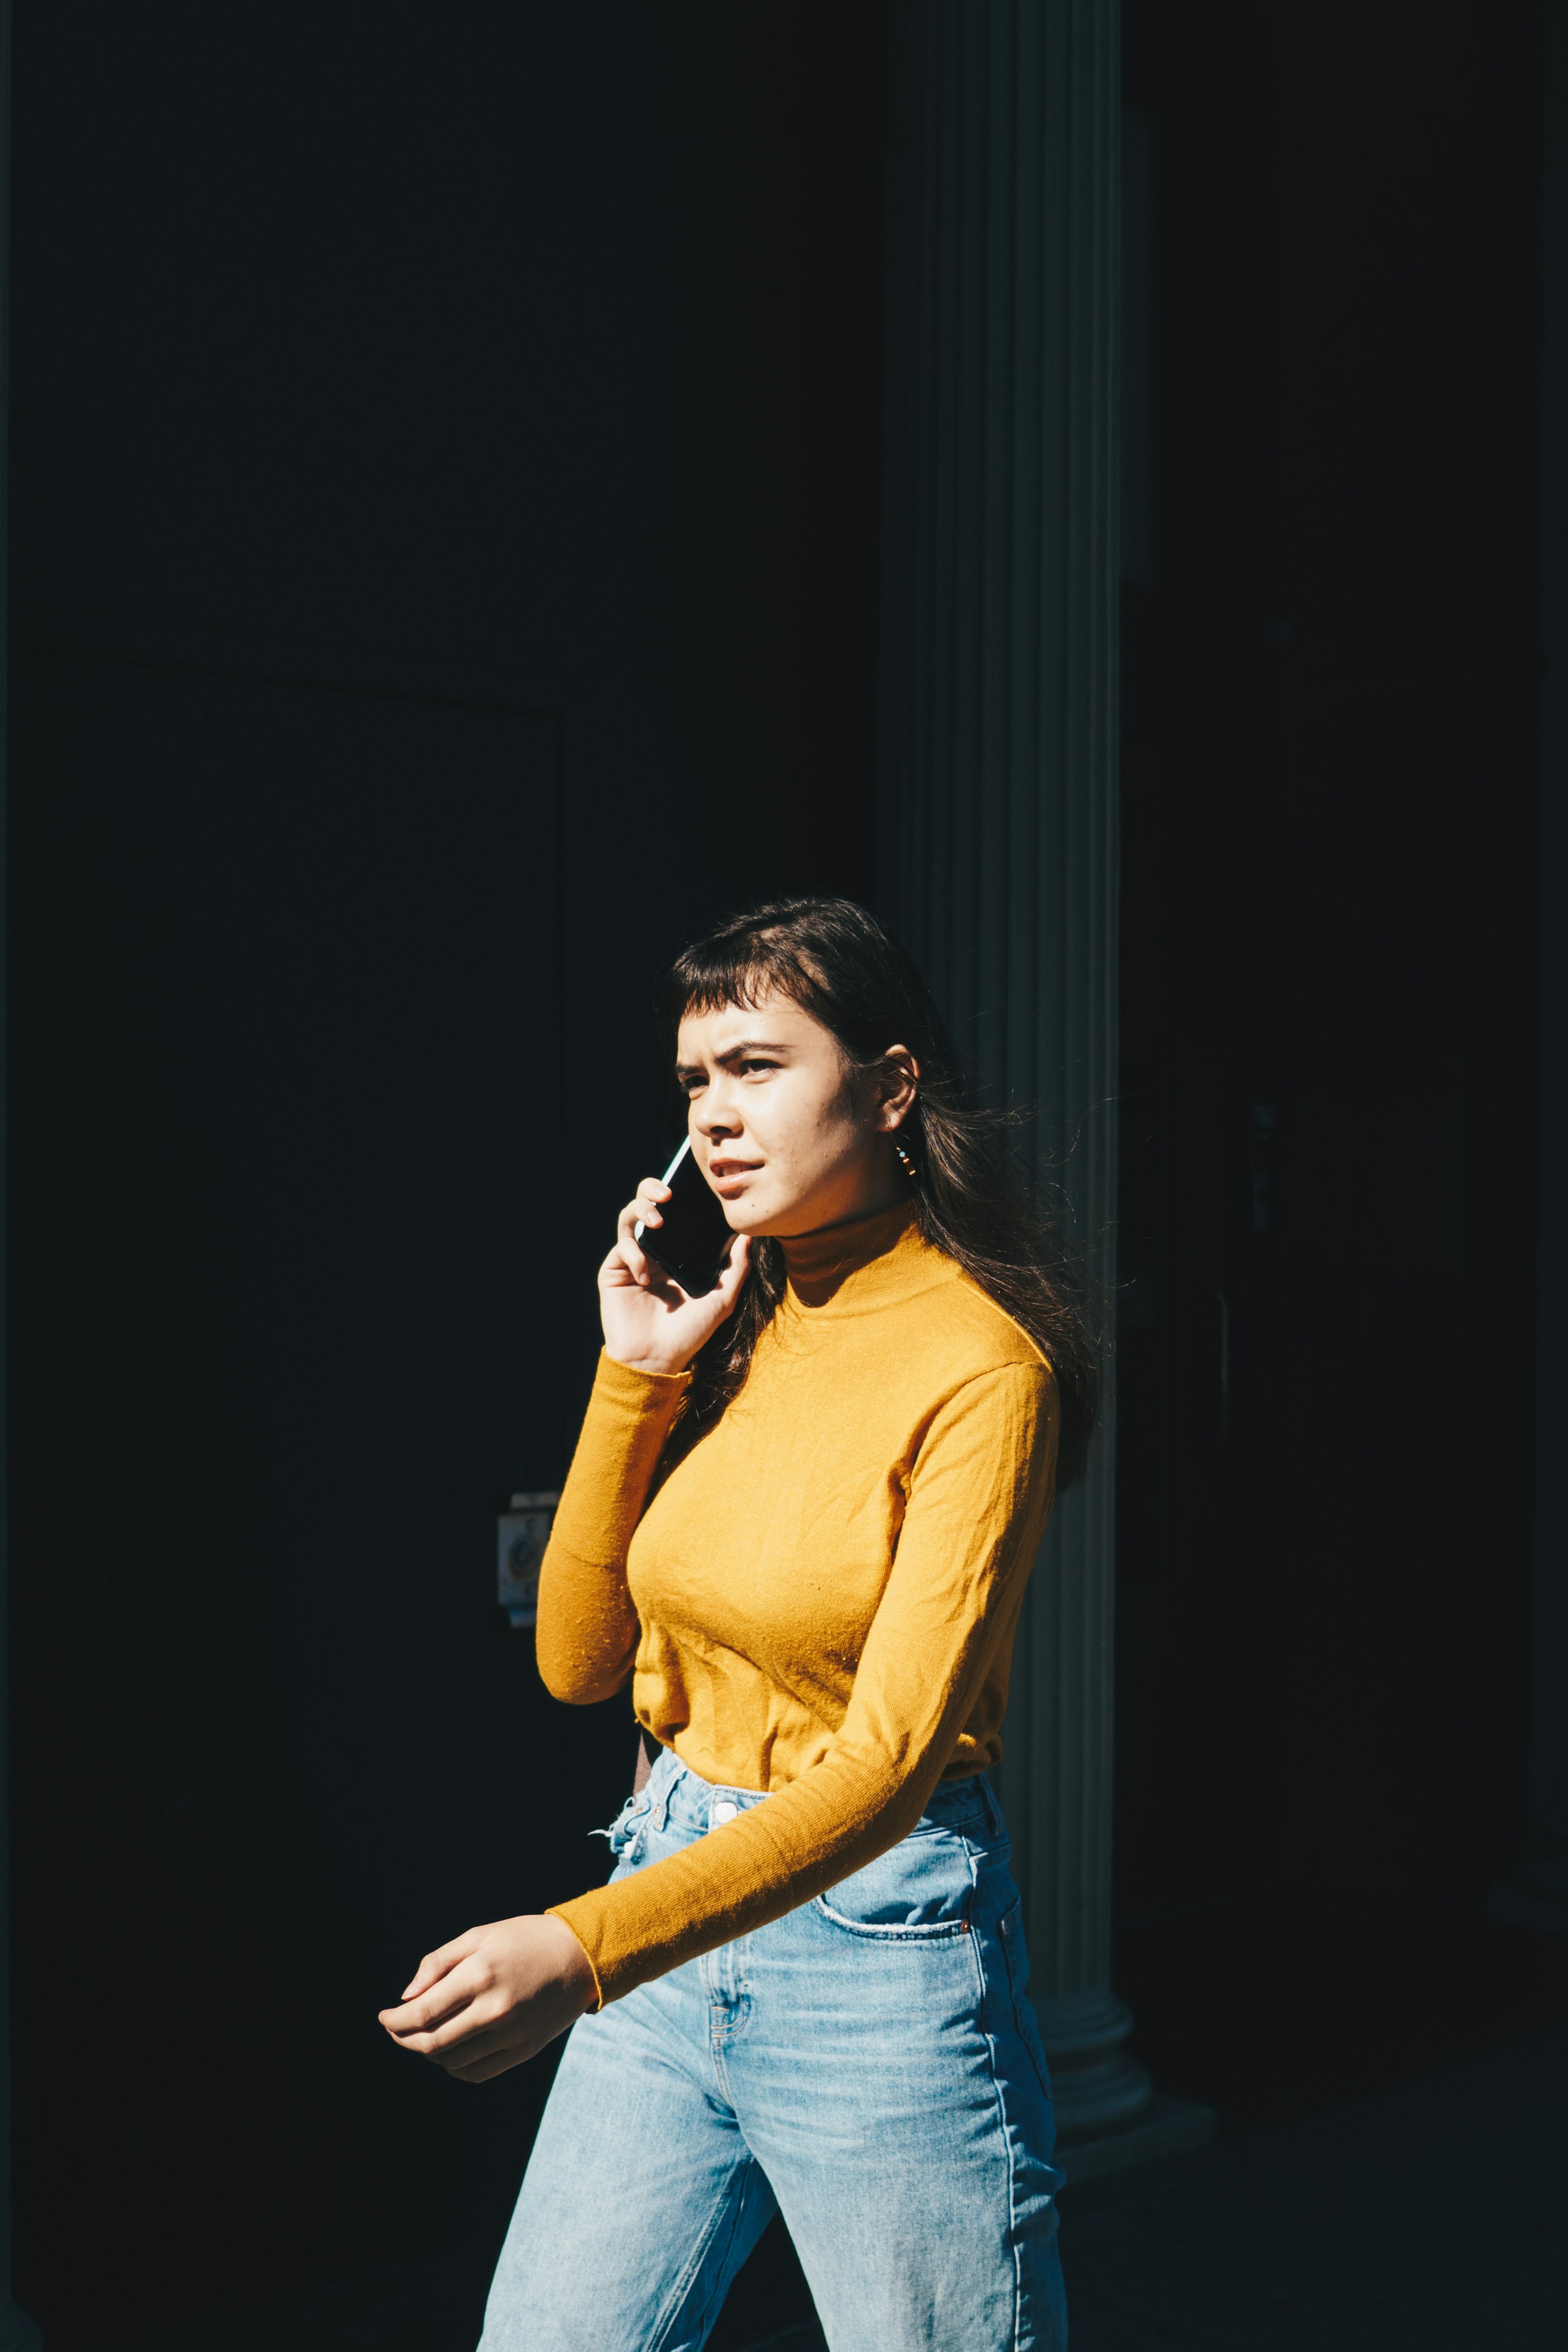 Woman talking on phone | Source: Unsplash